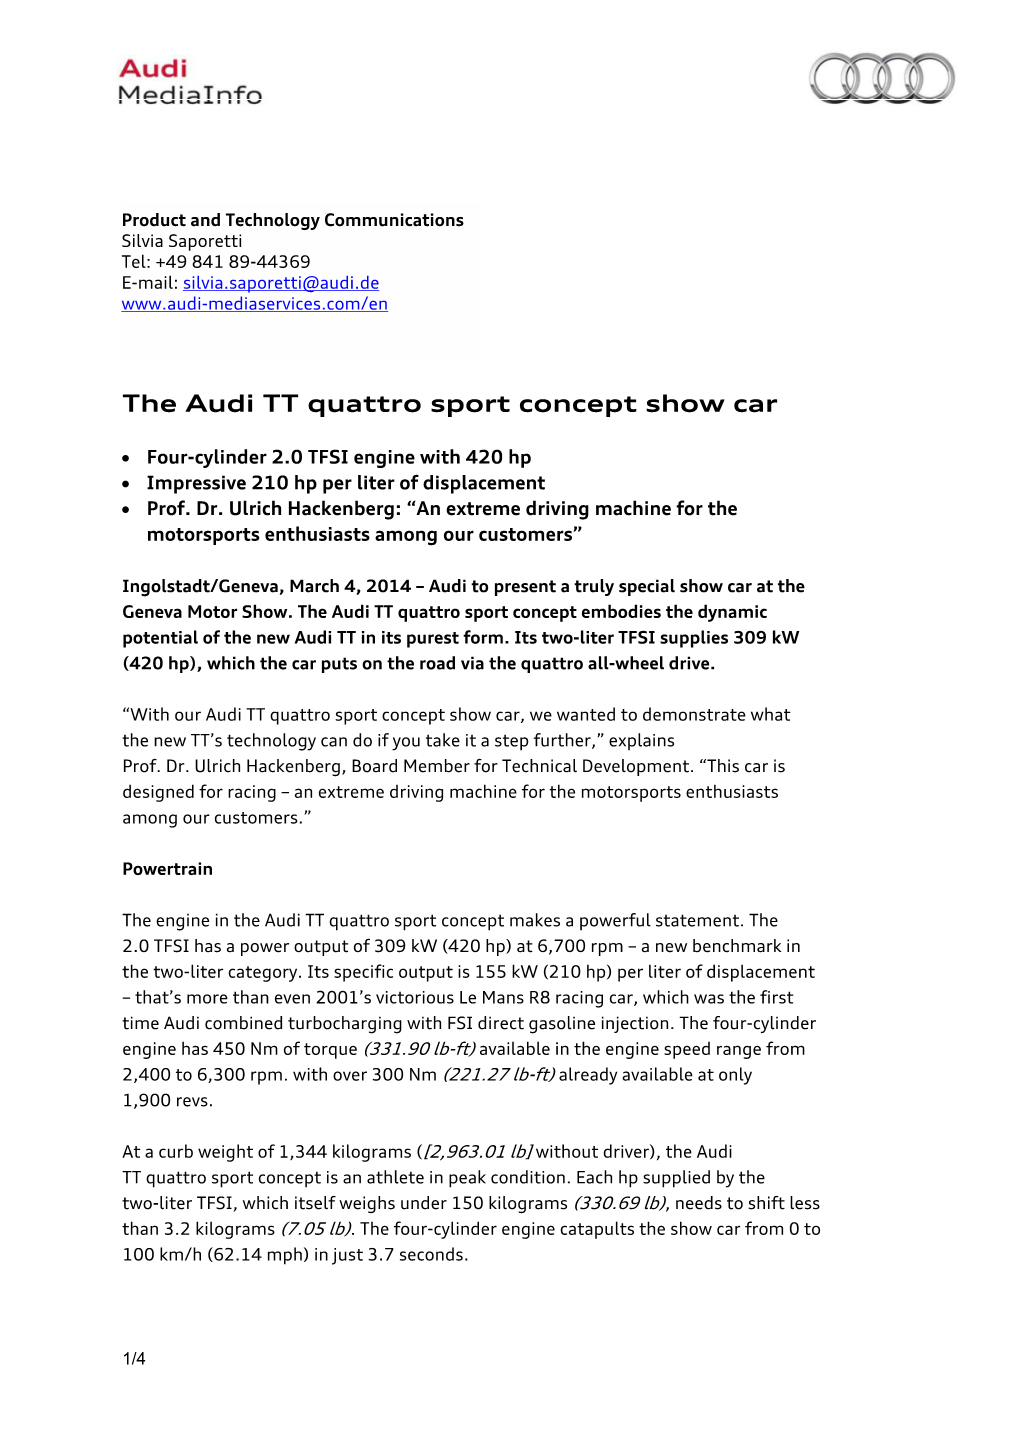 The Audi TT Quattro Sport Concept Show Car